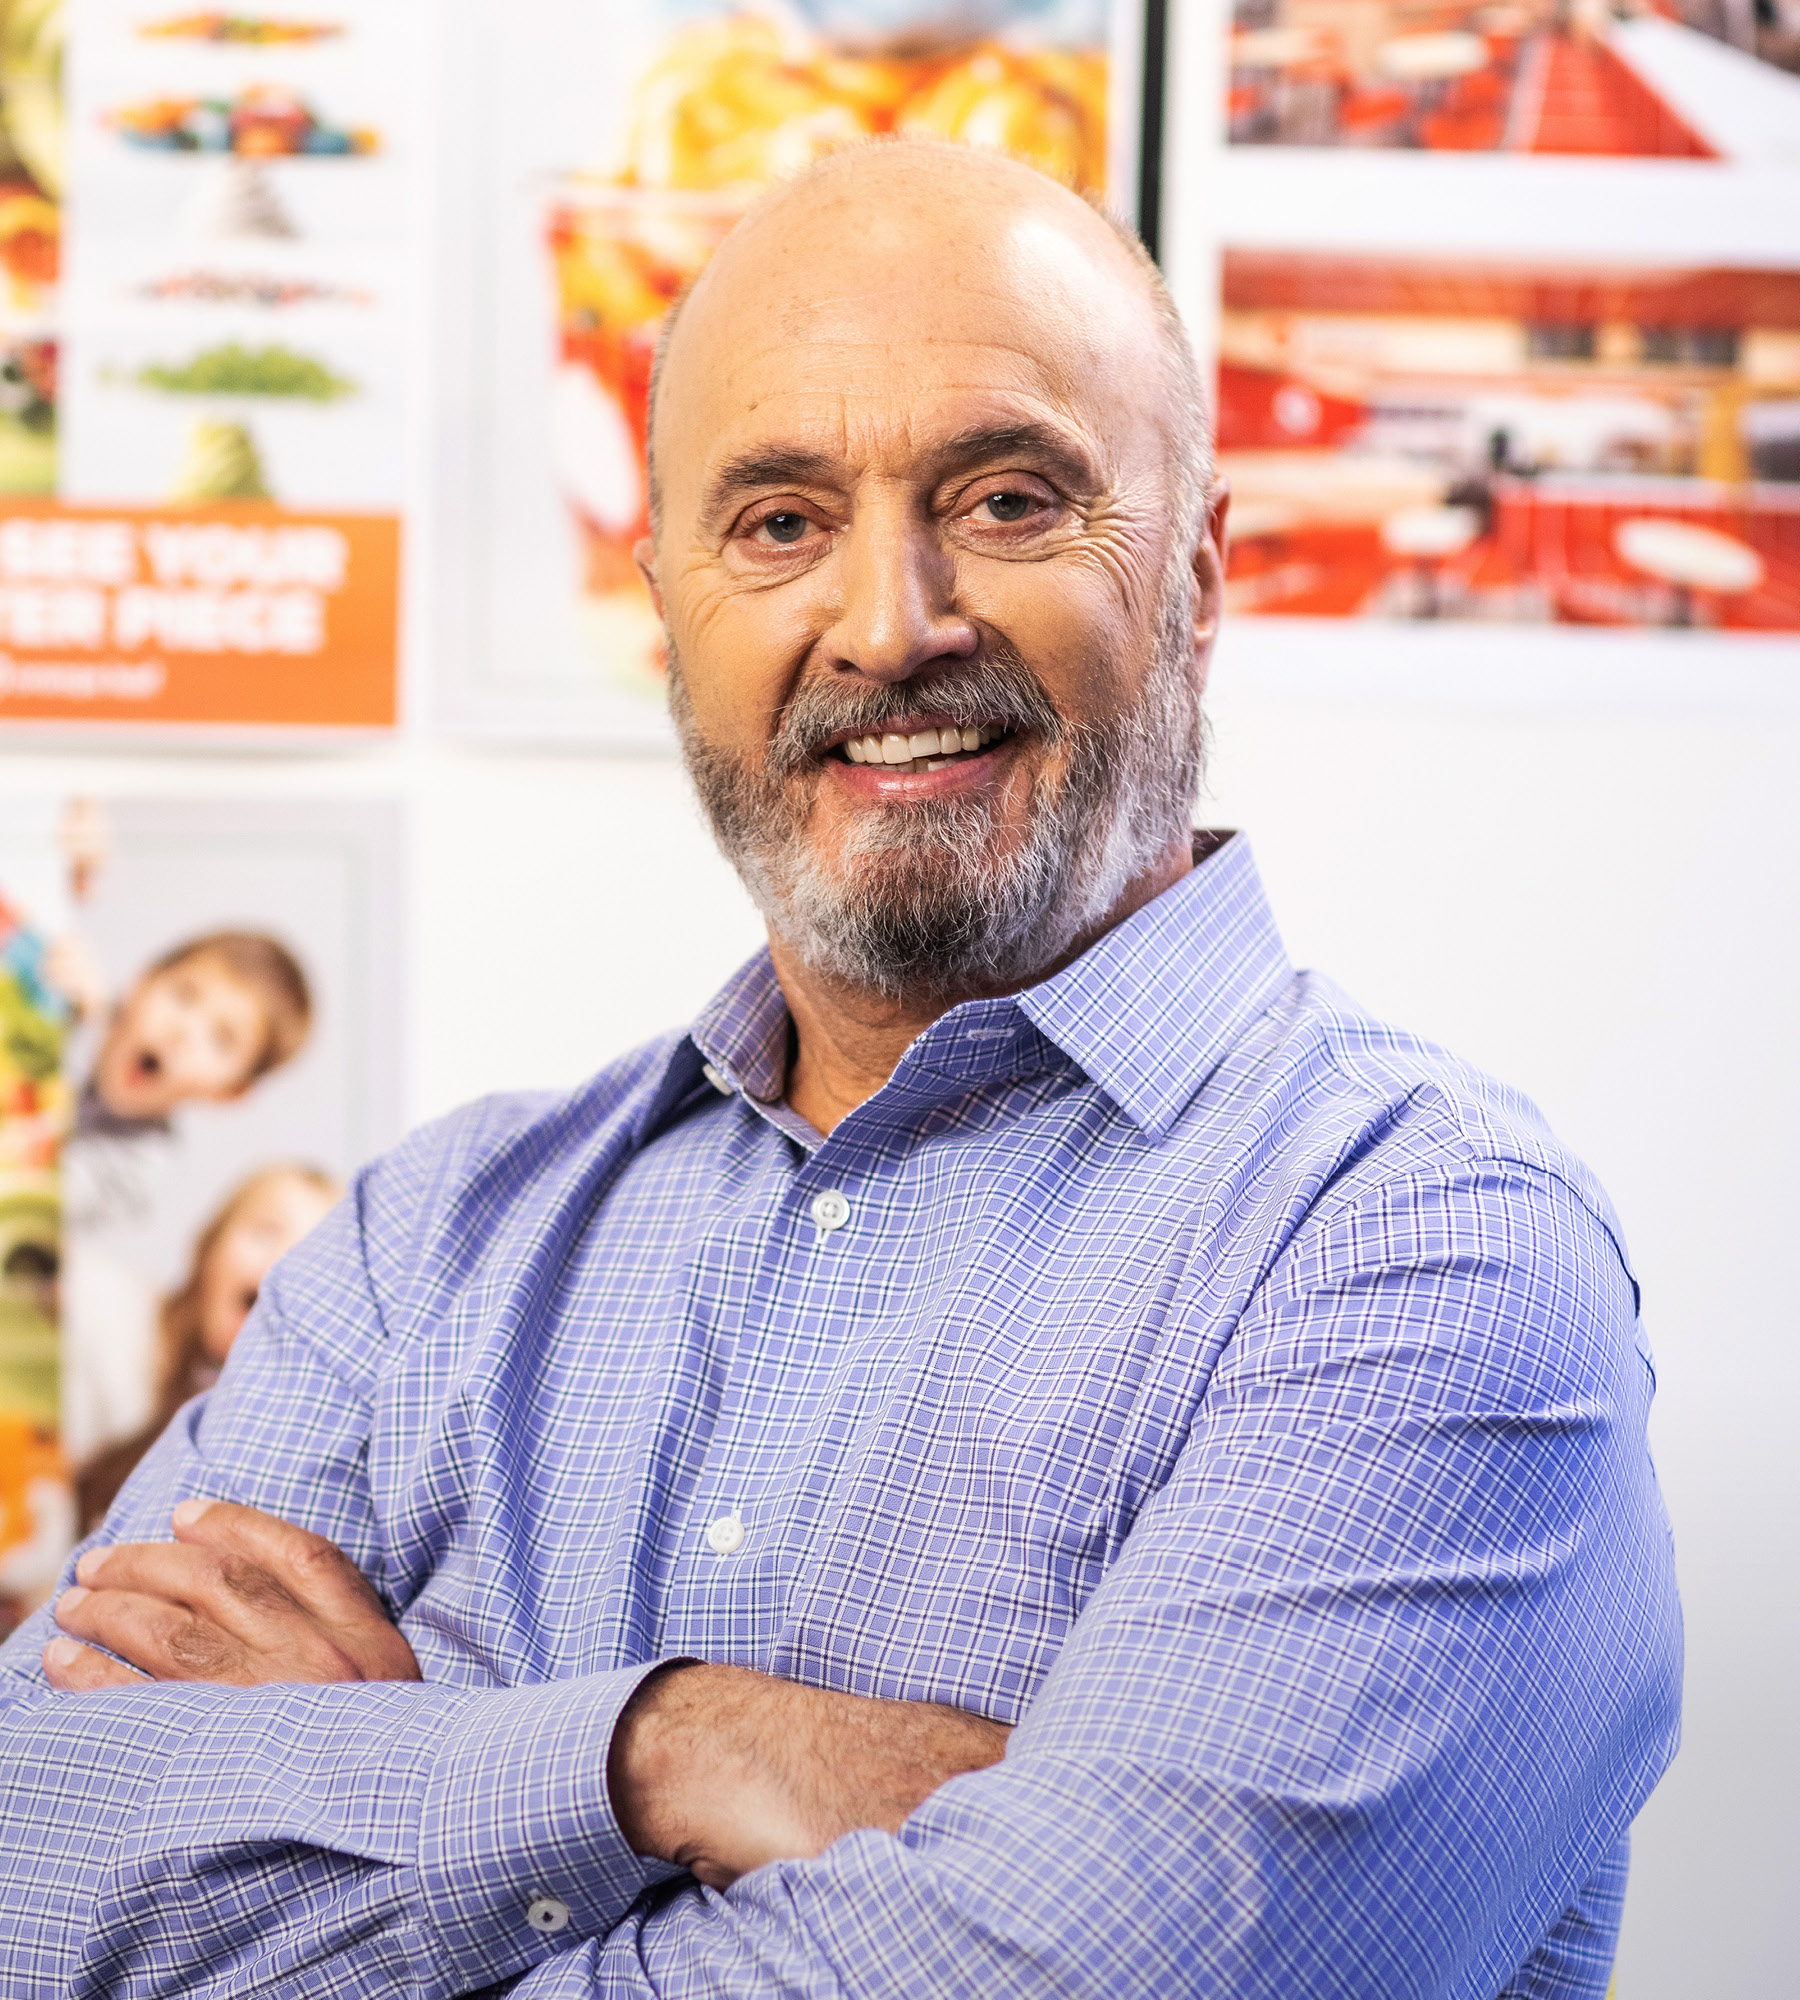 Friendly's parent company BRIX Holdings names Sherif Mityas CEO